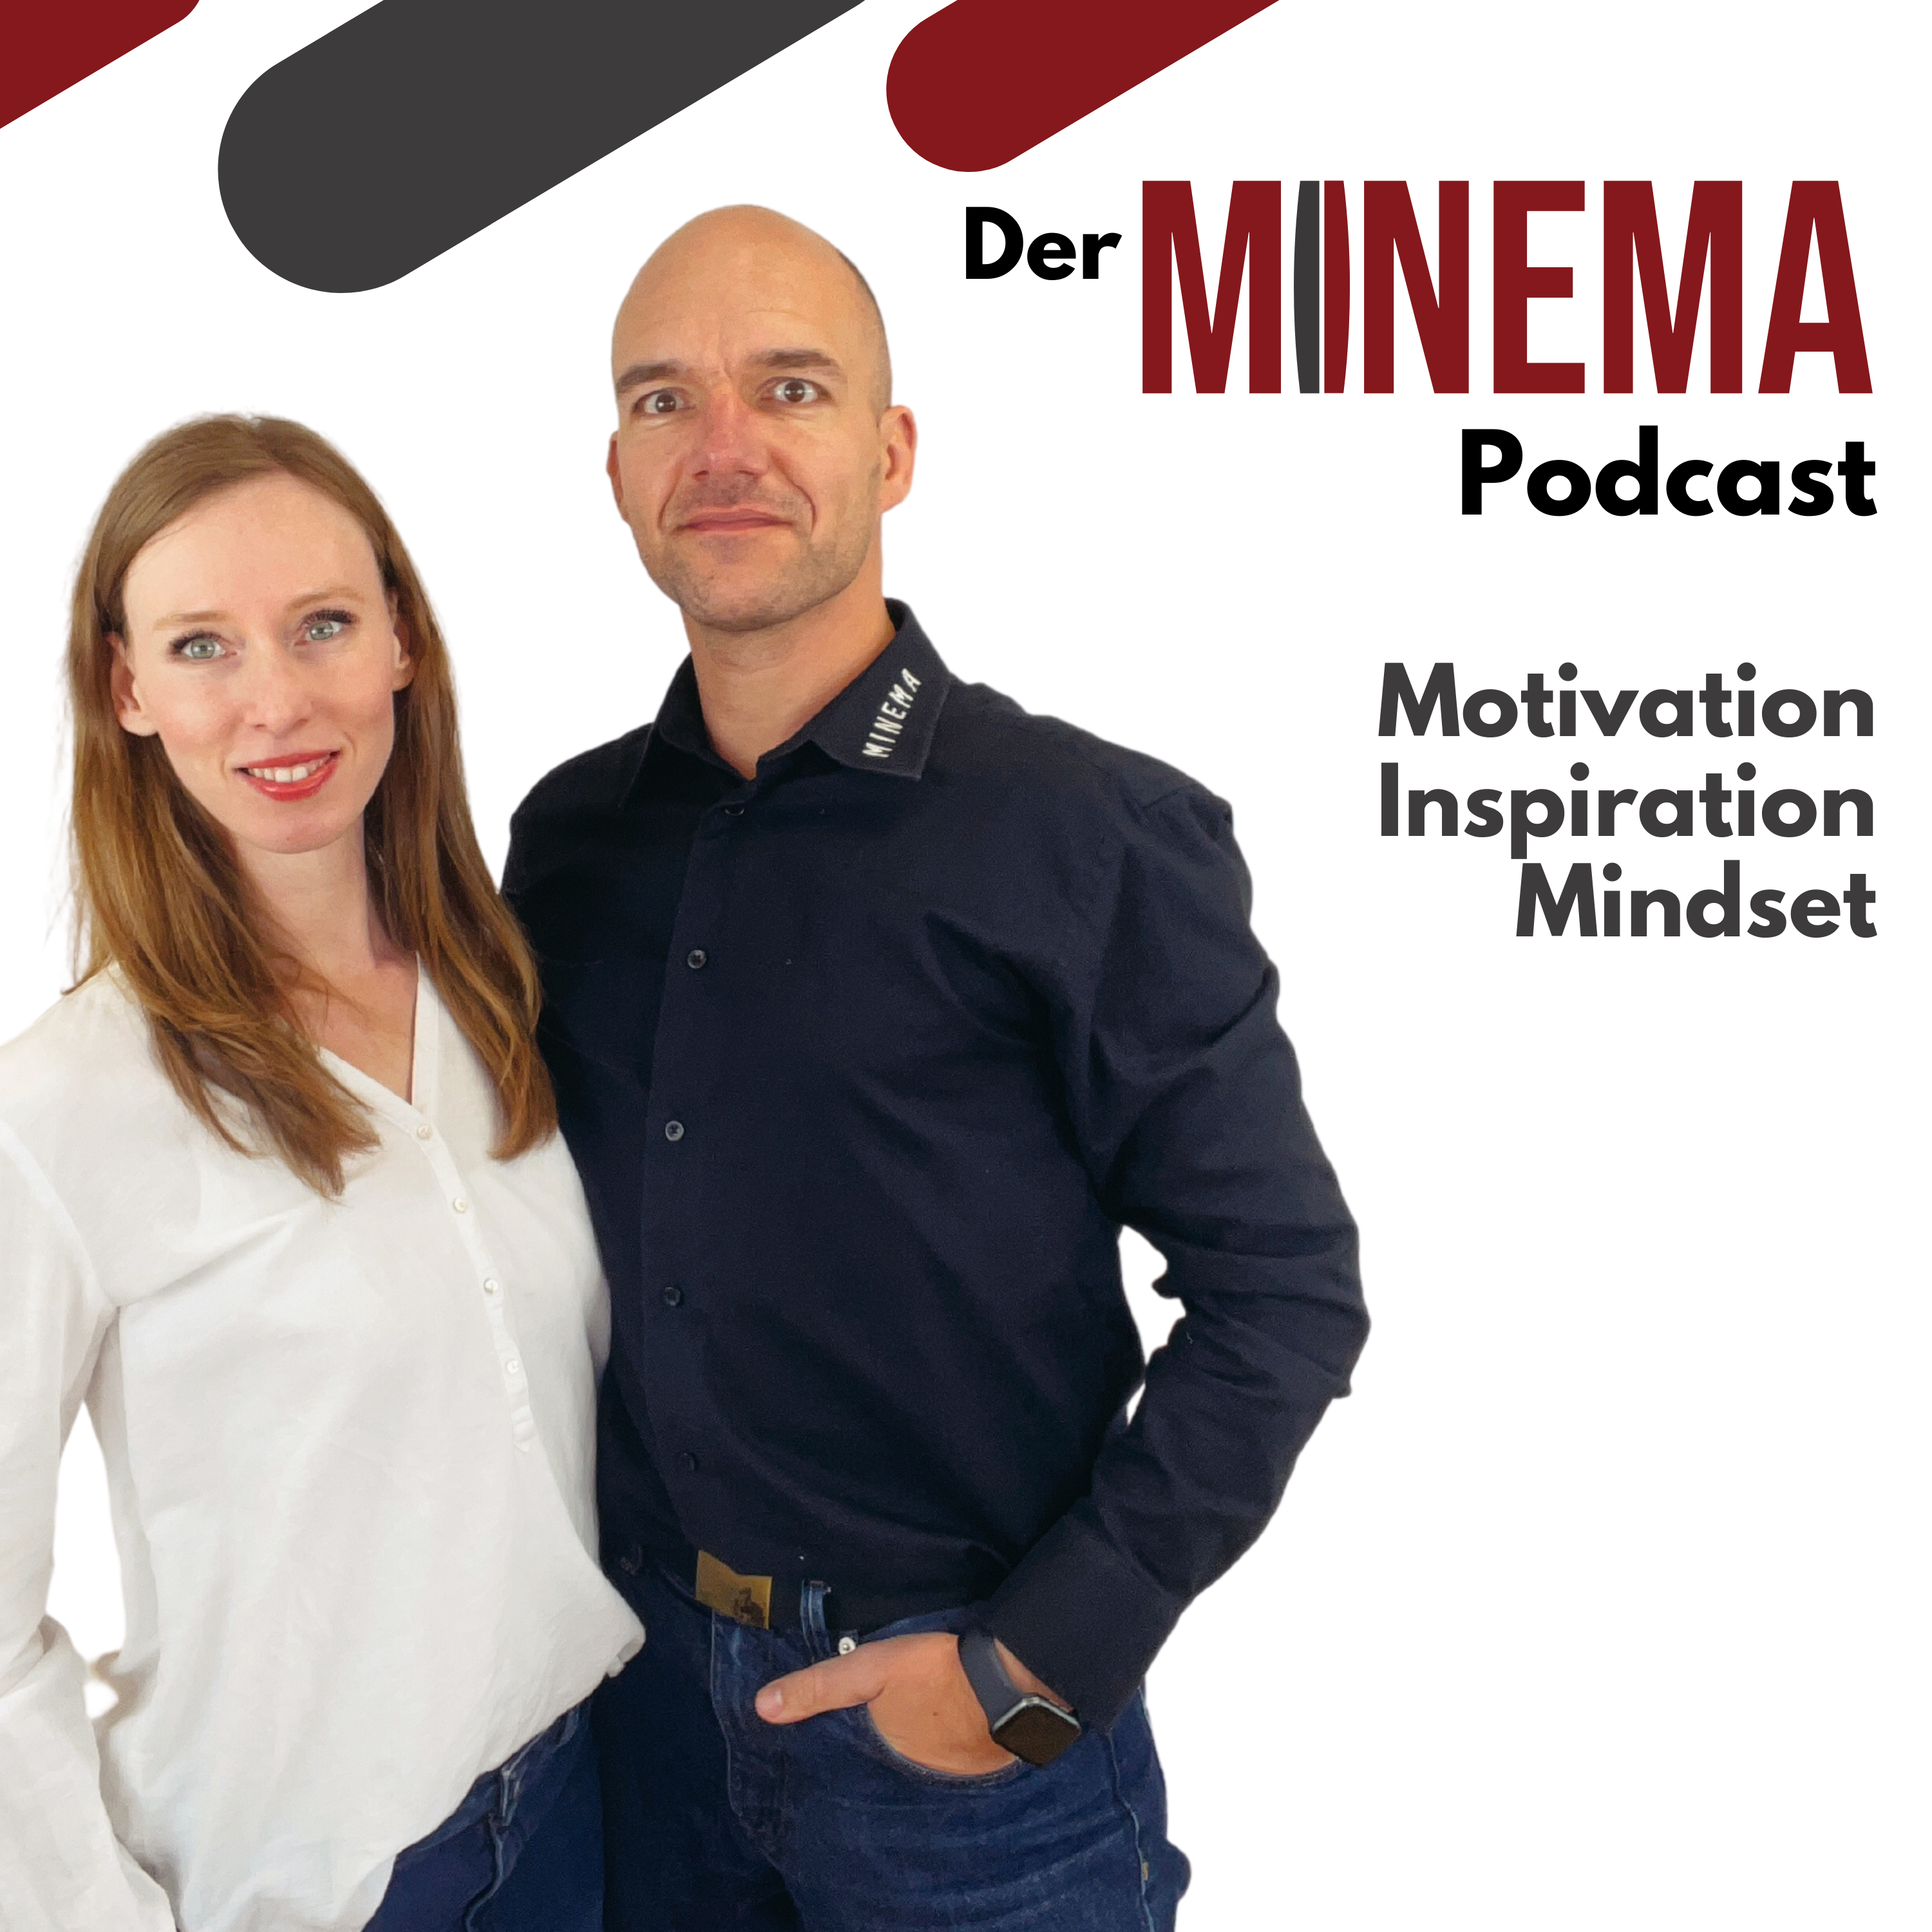 MINEMA Podcast